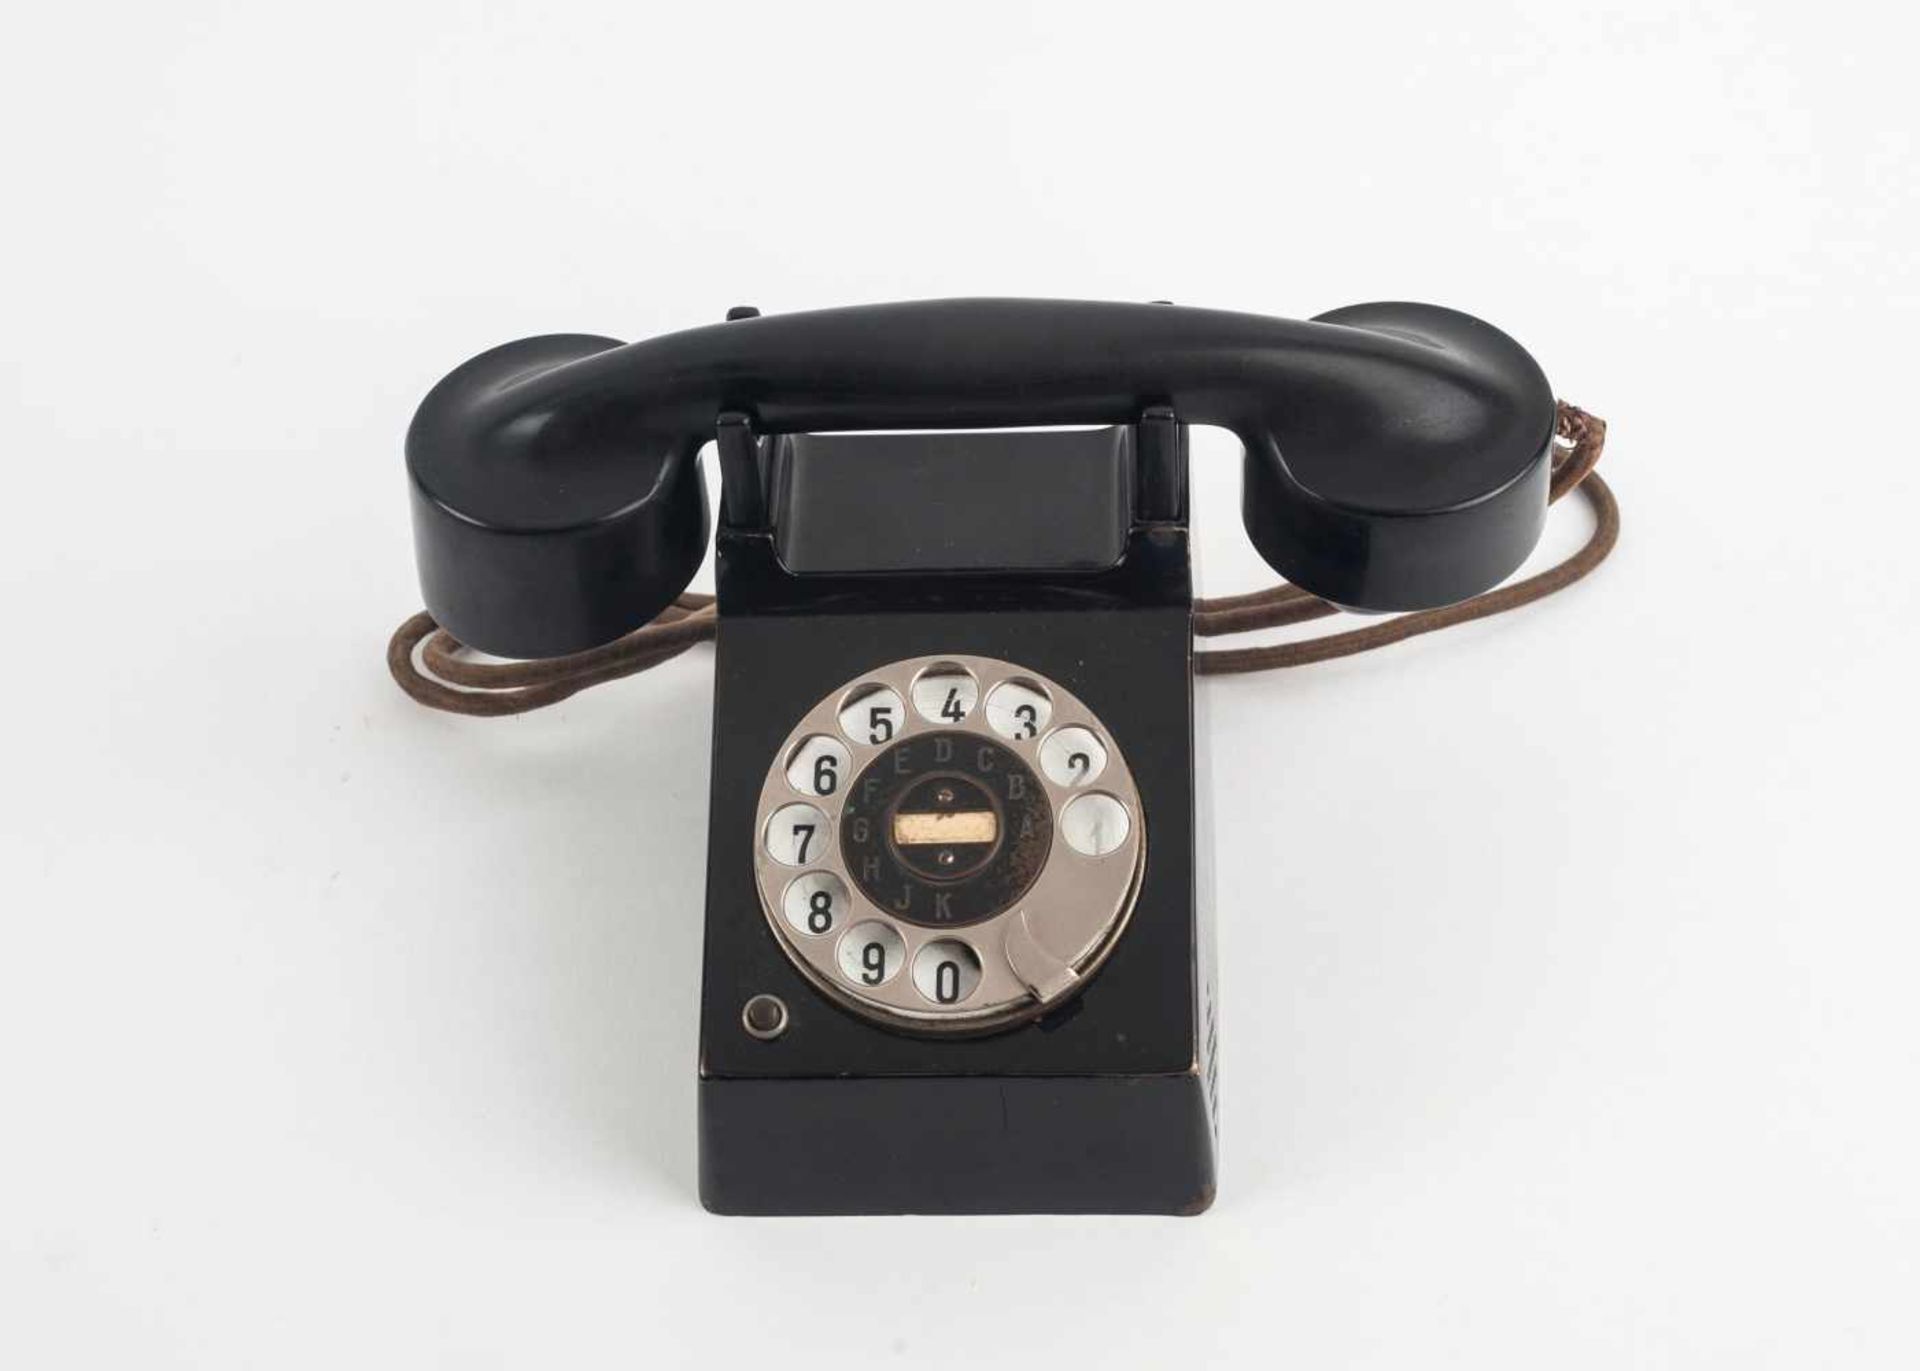 Bauhaus Dessau 'Bauhaus'-Telefon, 1929 H. 13,2 x 11,2 x 15,8 cm; Hörer: L. 24,8 cm. H. Fuld u. - Image 2 of 3